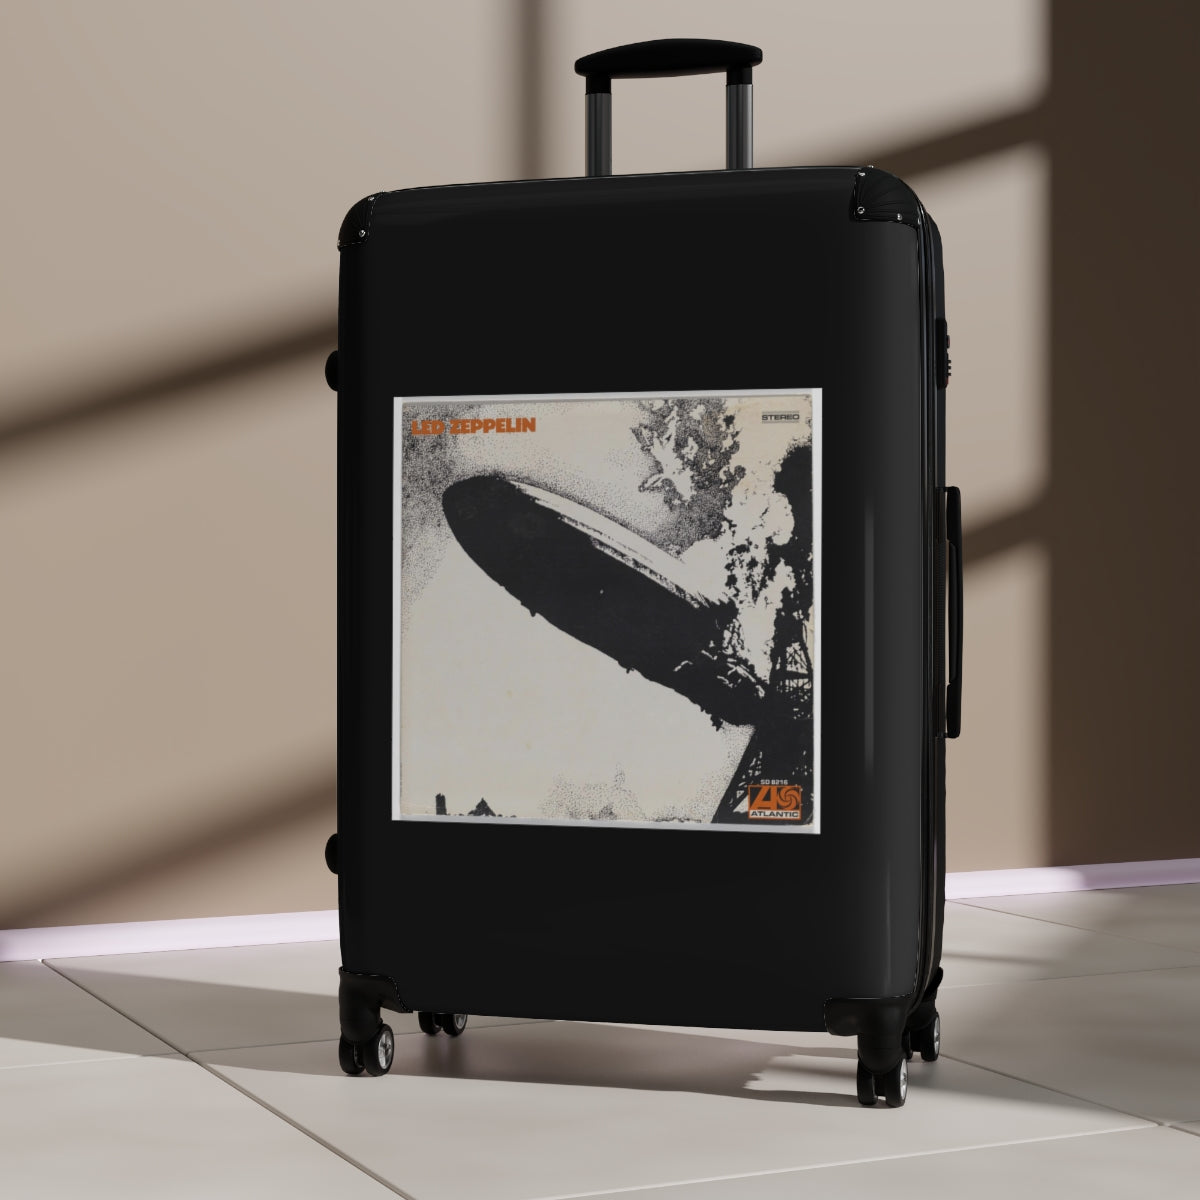 Getrott Led Zeppelin Led Zeppelin 1969 Black Cabin Suitcase Inner Pockets Extended Storage Adjustable Telescopic Handle Inner Pockets Double wheeled Polycarbonate Hard-shell Built-in Lock